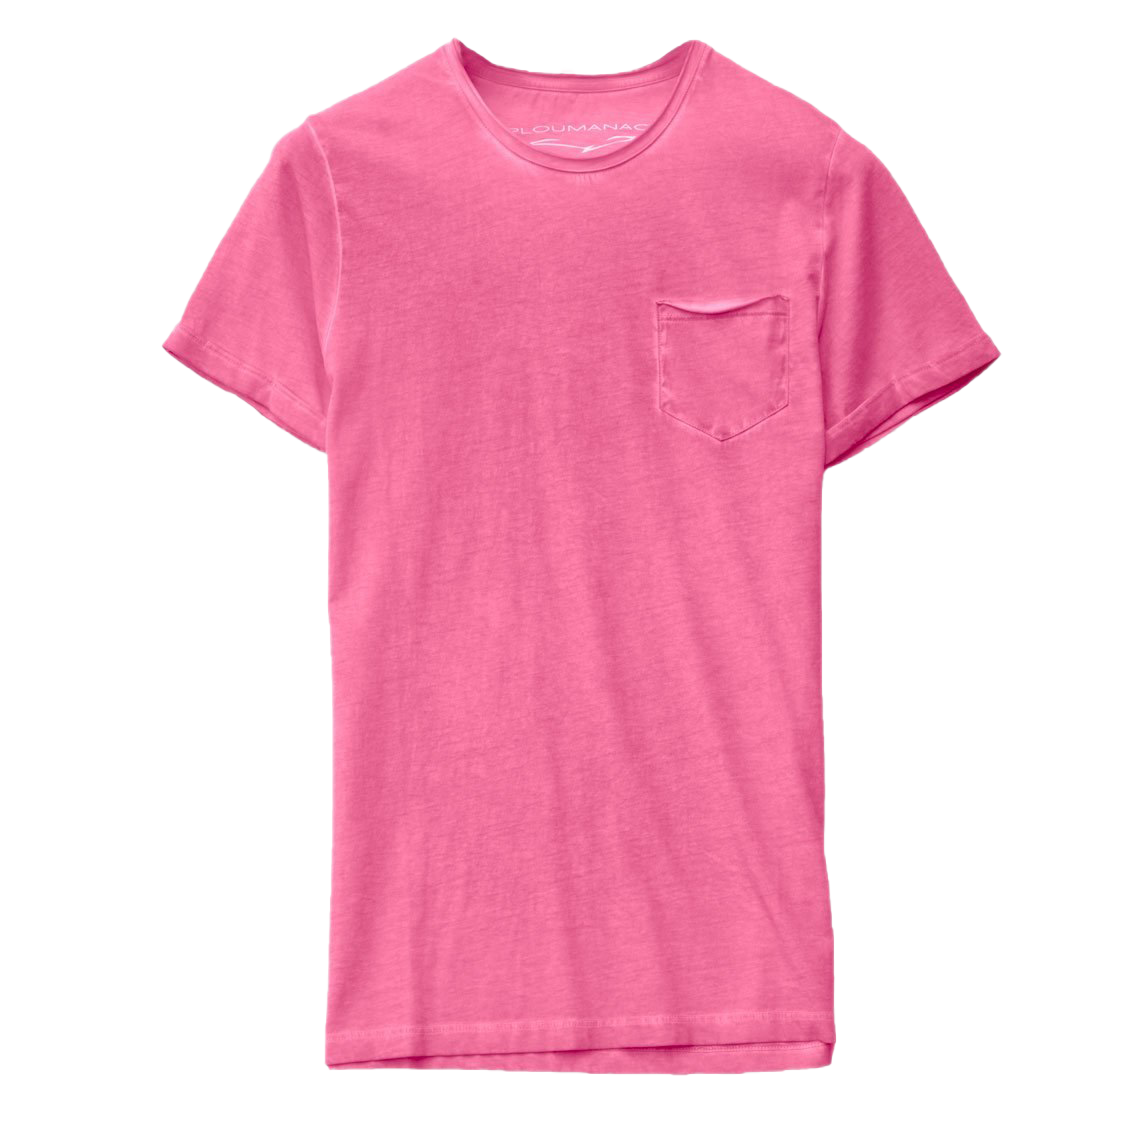 Простая розовая футболка PNG картина